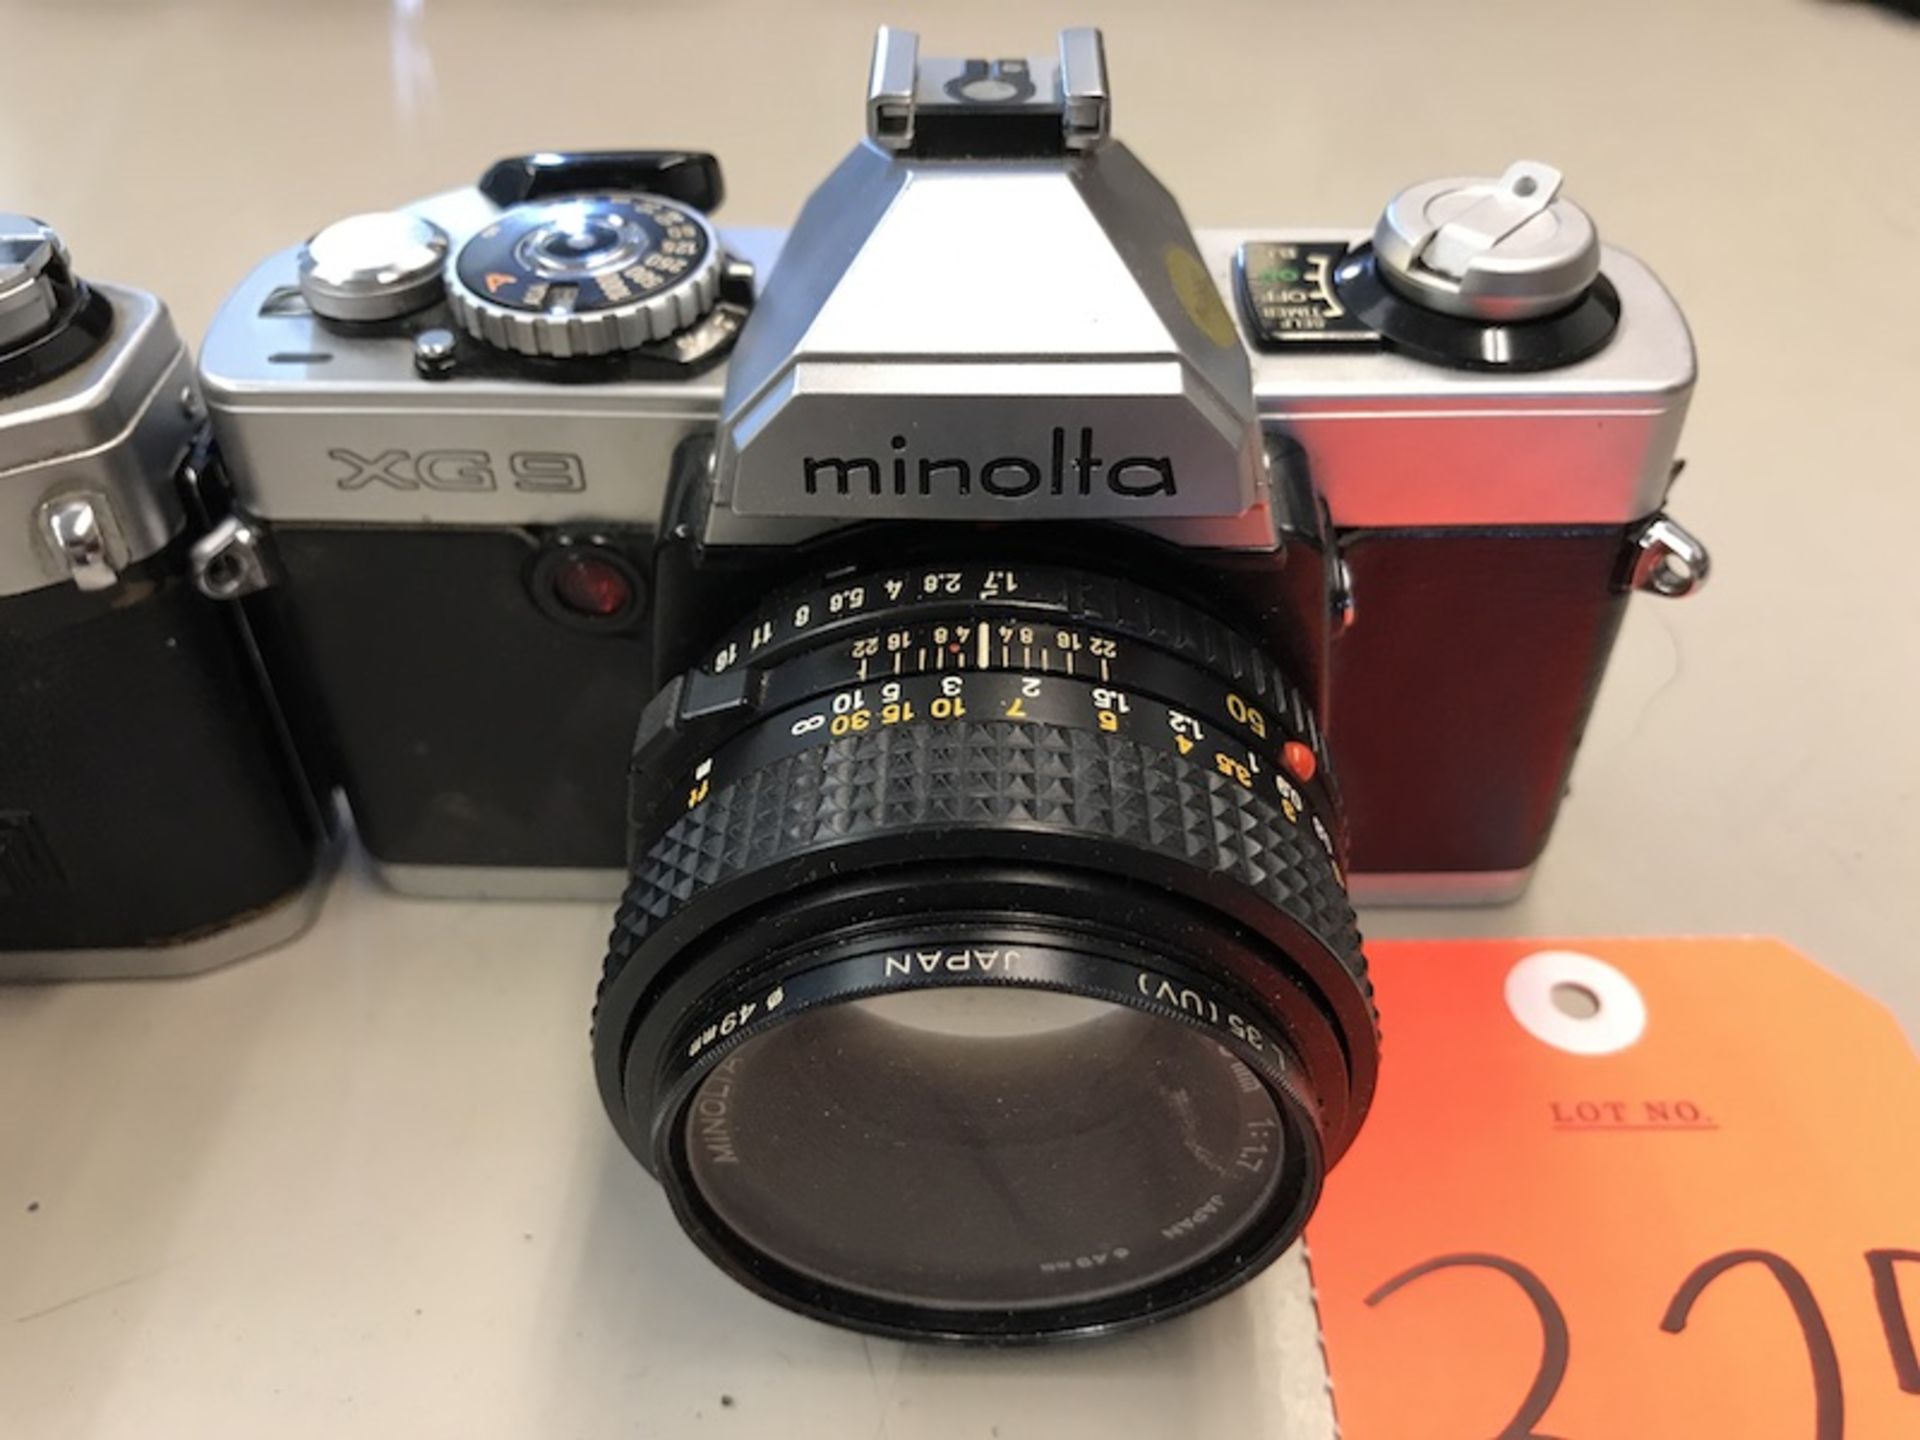 Lot - (1) Canon AE-1 Camera (1) Minolta XG9 Camera (Room 108) - Image 3 of 3